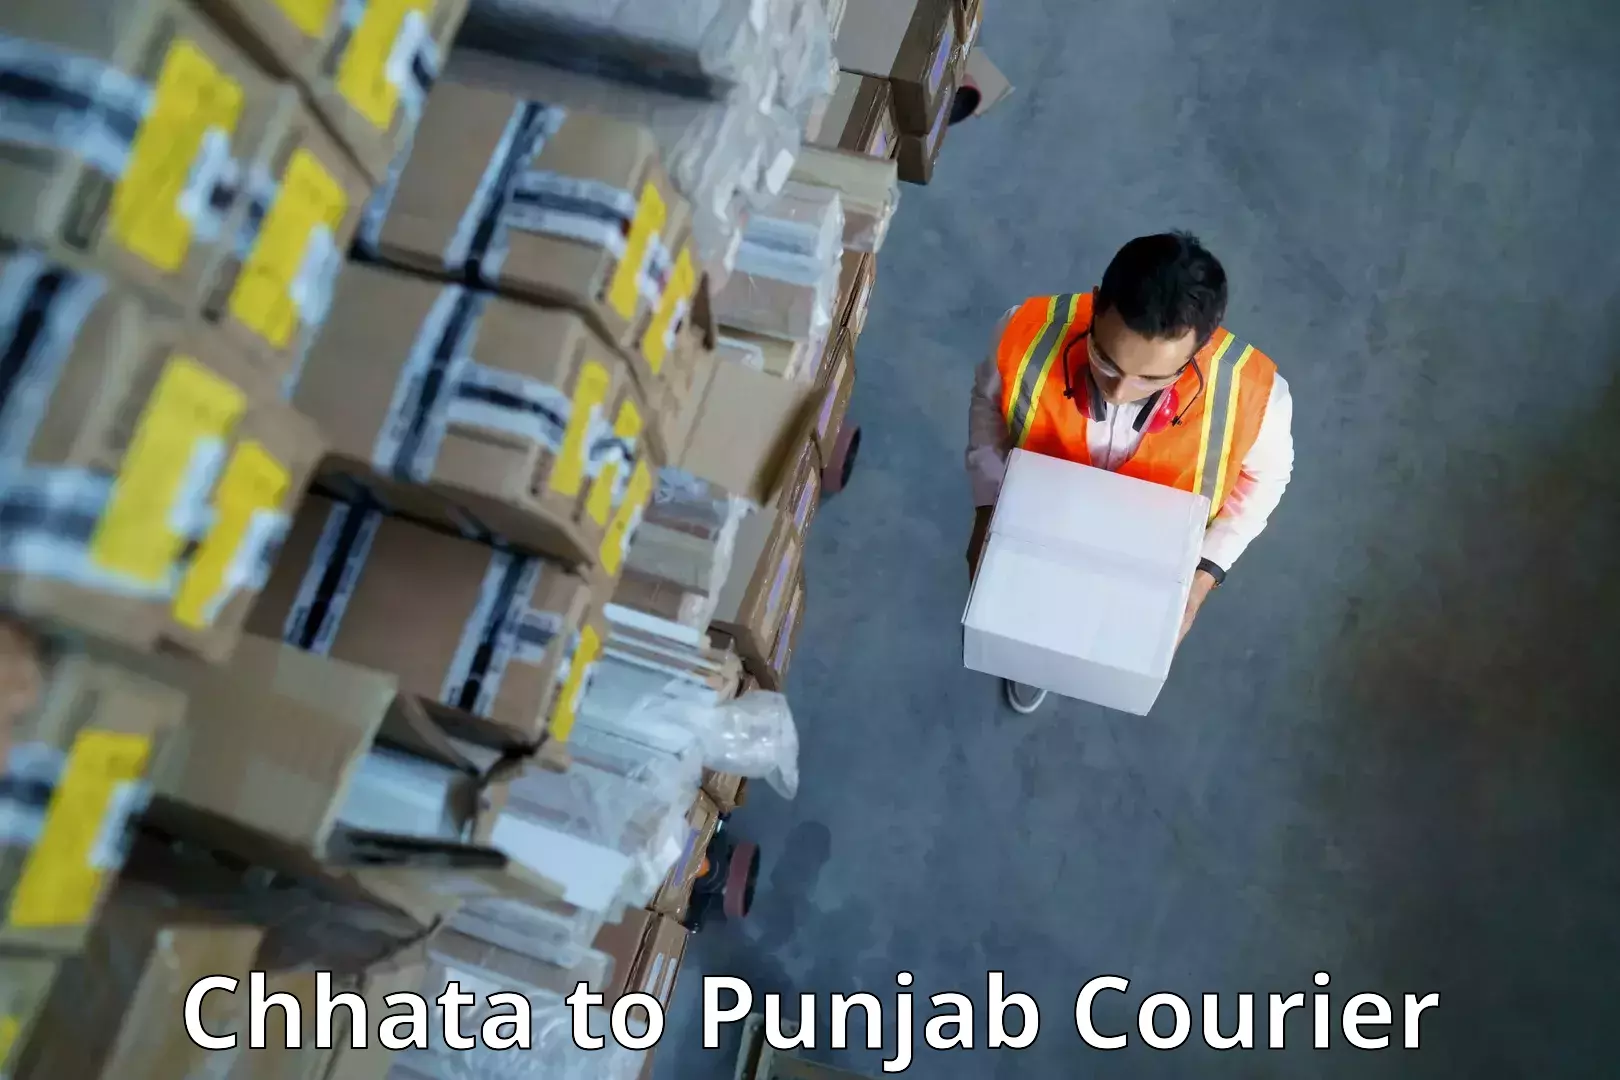 Reliable logistics providers Chhata to Punjab